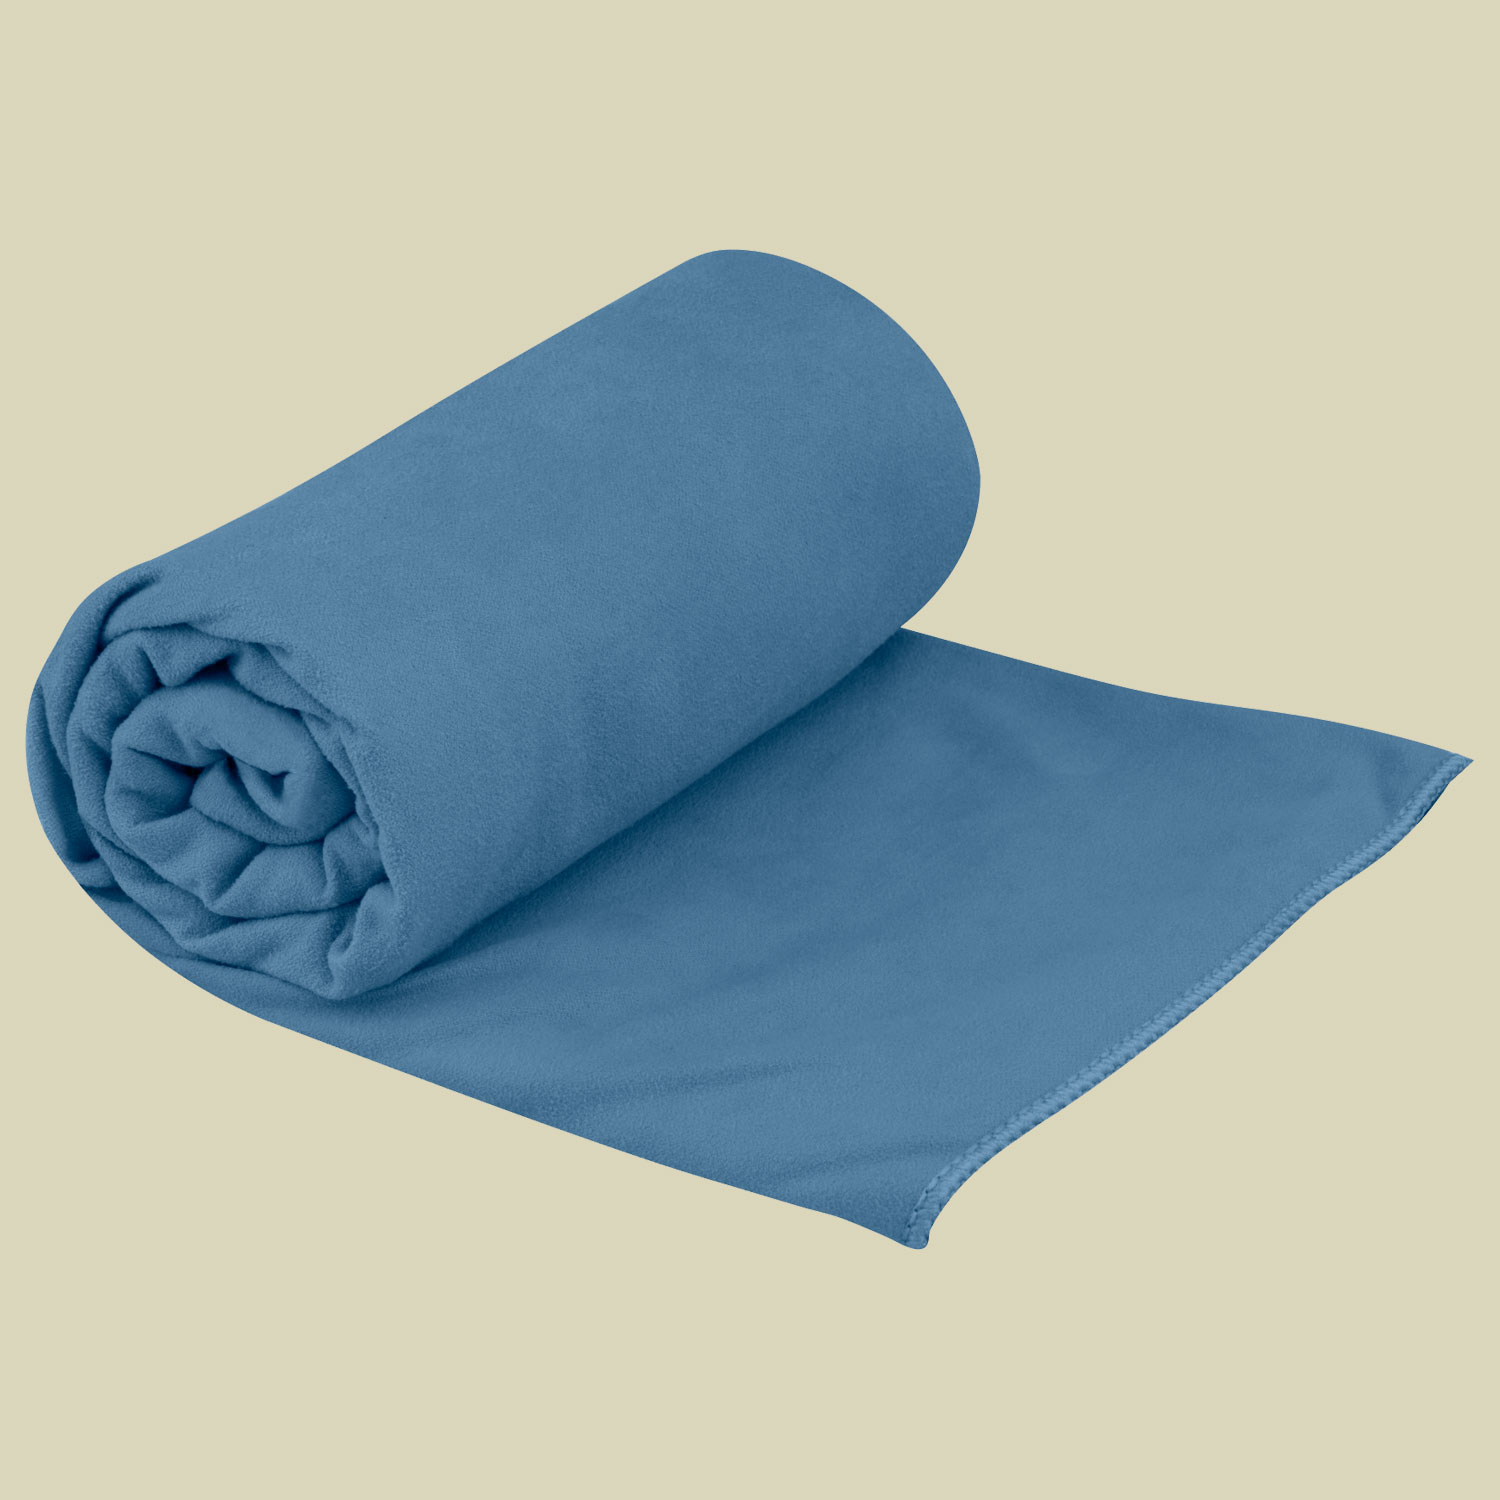 Drylite Towel Größe L Farbe moonlight